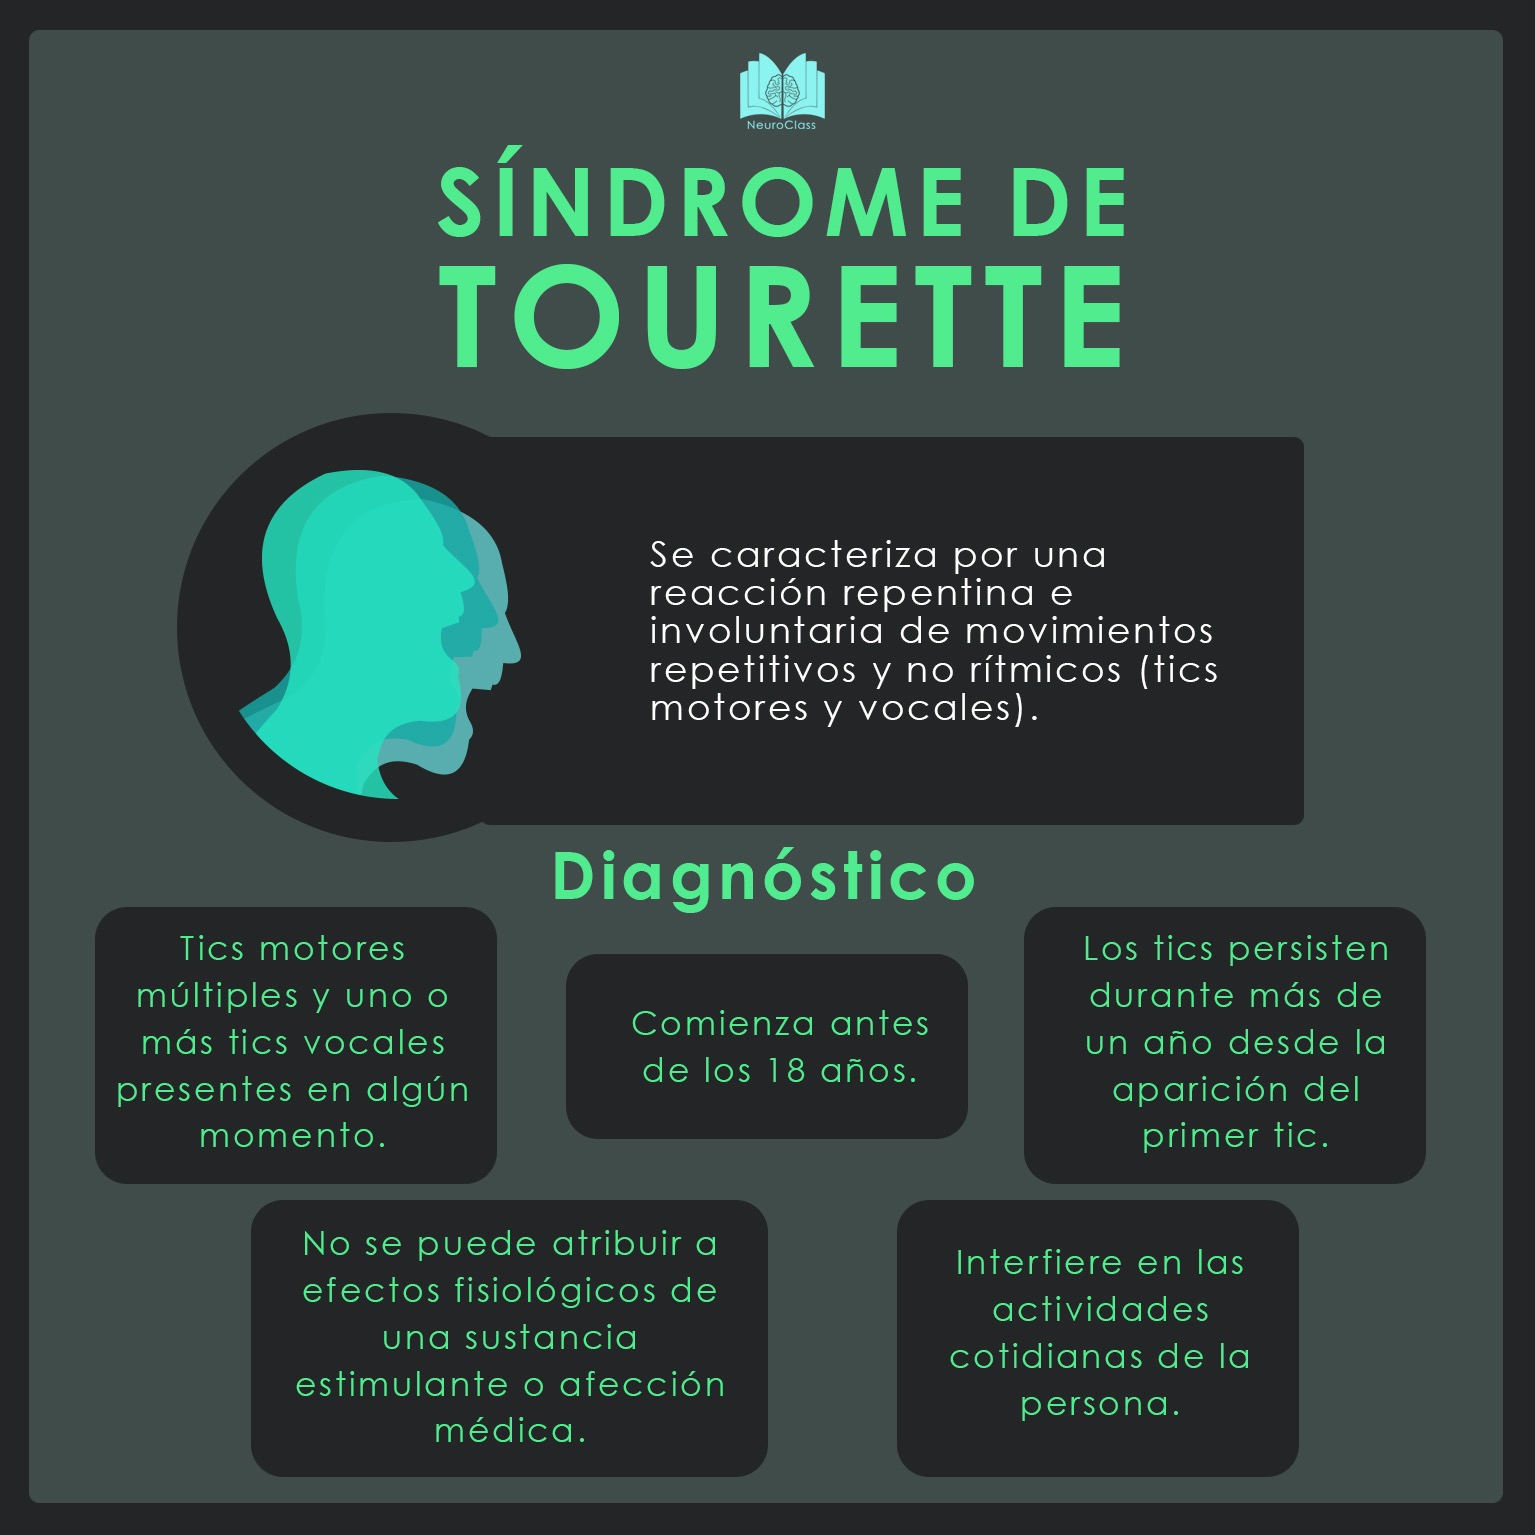 Síndrome de Tourette Qué implicaciones tiene NeuroClass